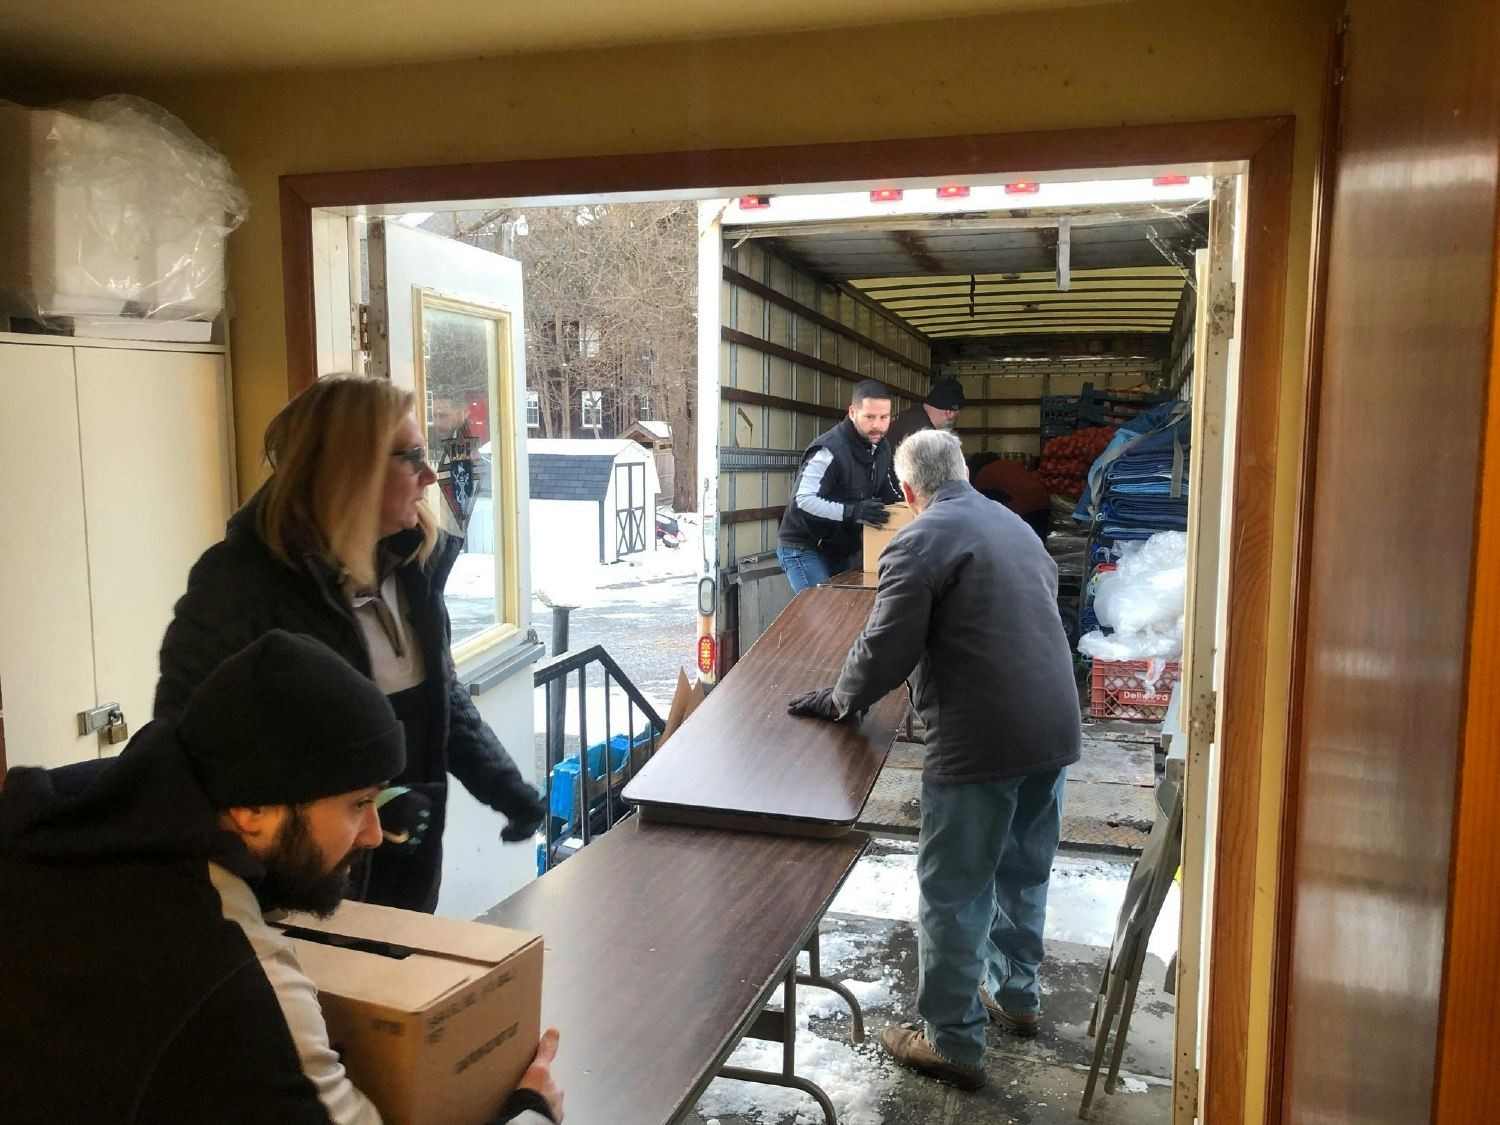 CEO, Brett Melchin, and employees volunteer at local food banks around the holiday season.